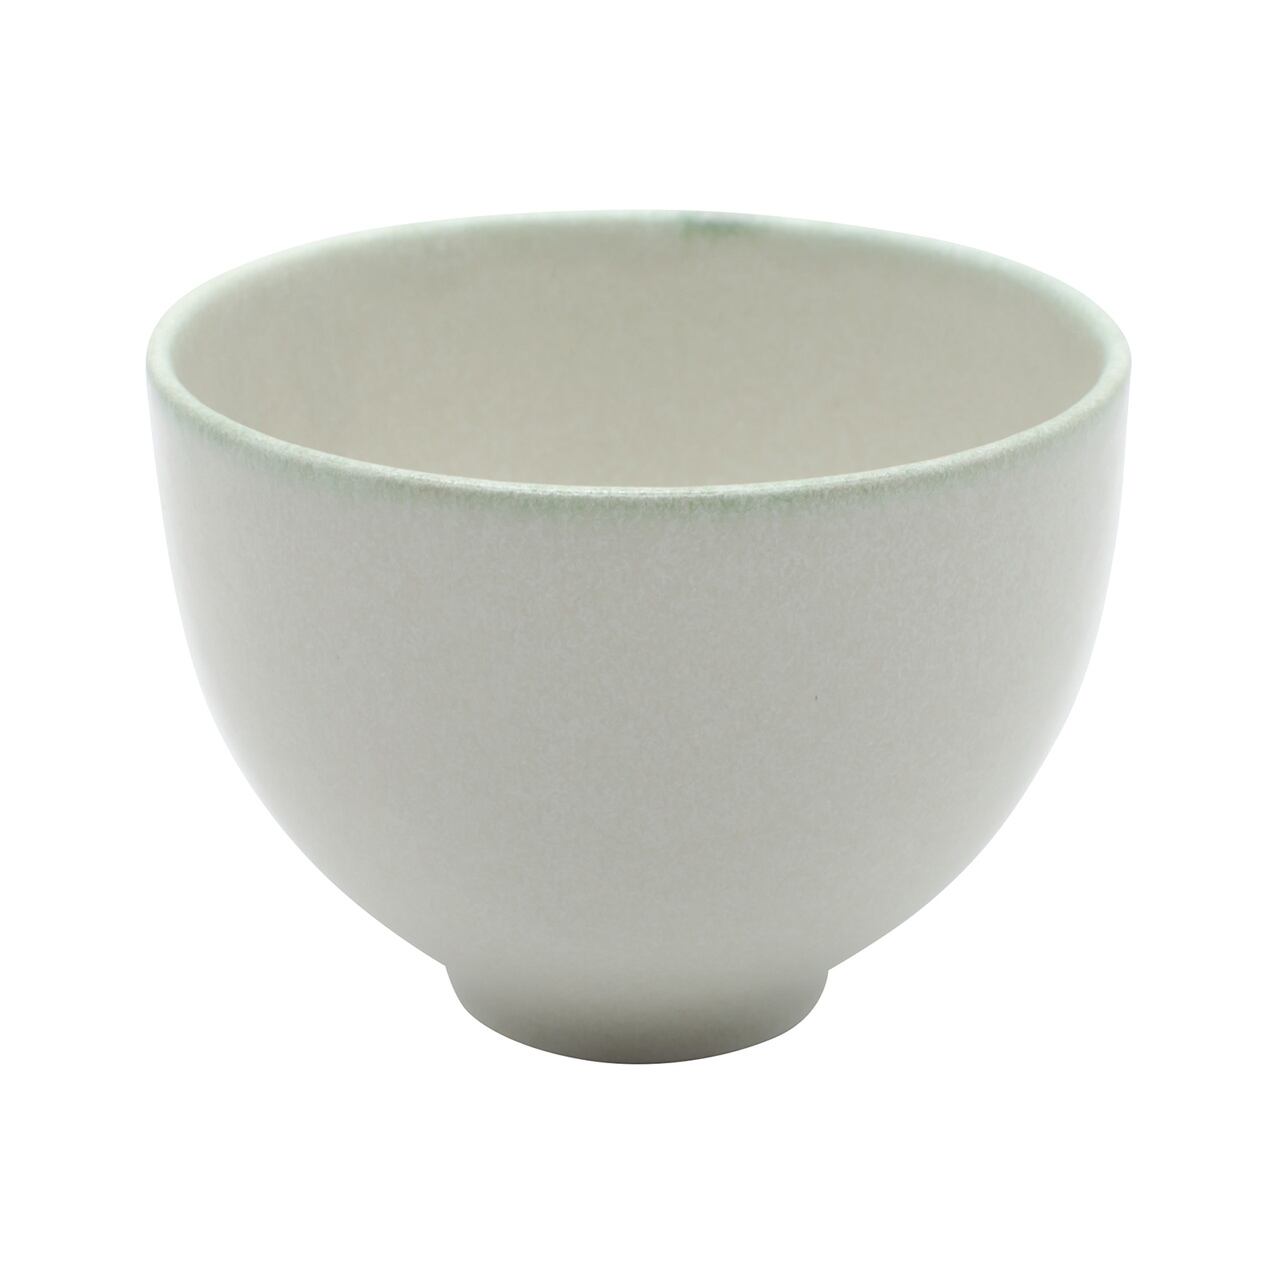 aito製作所 「 翠 Sui 」お茶碗 姫碗 約10cm 月白 美濃焼 288225